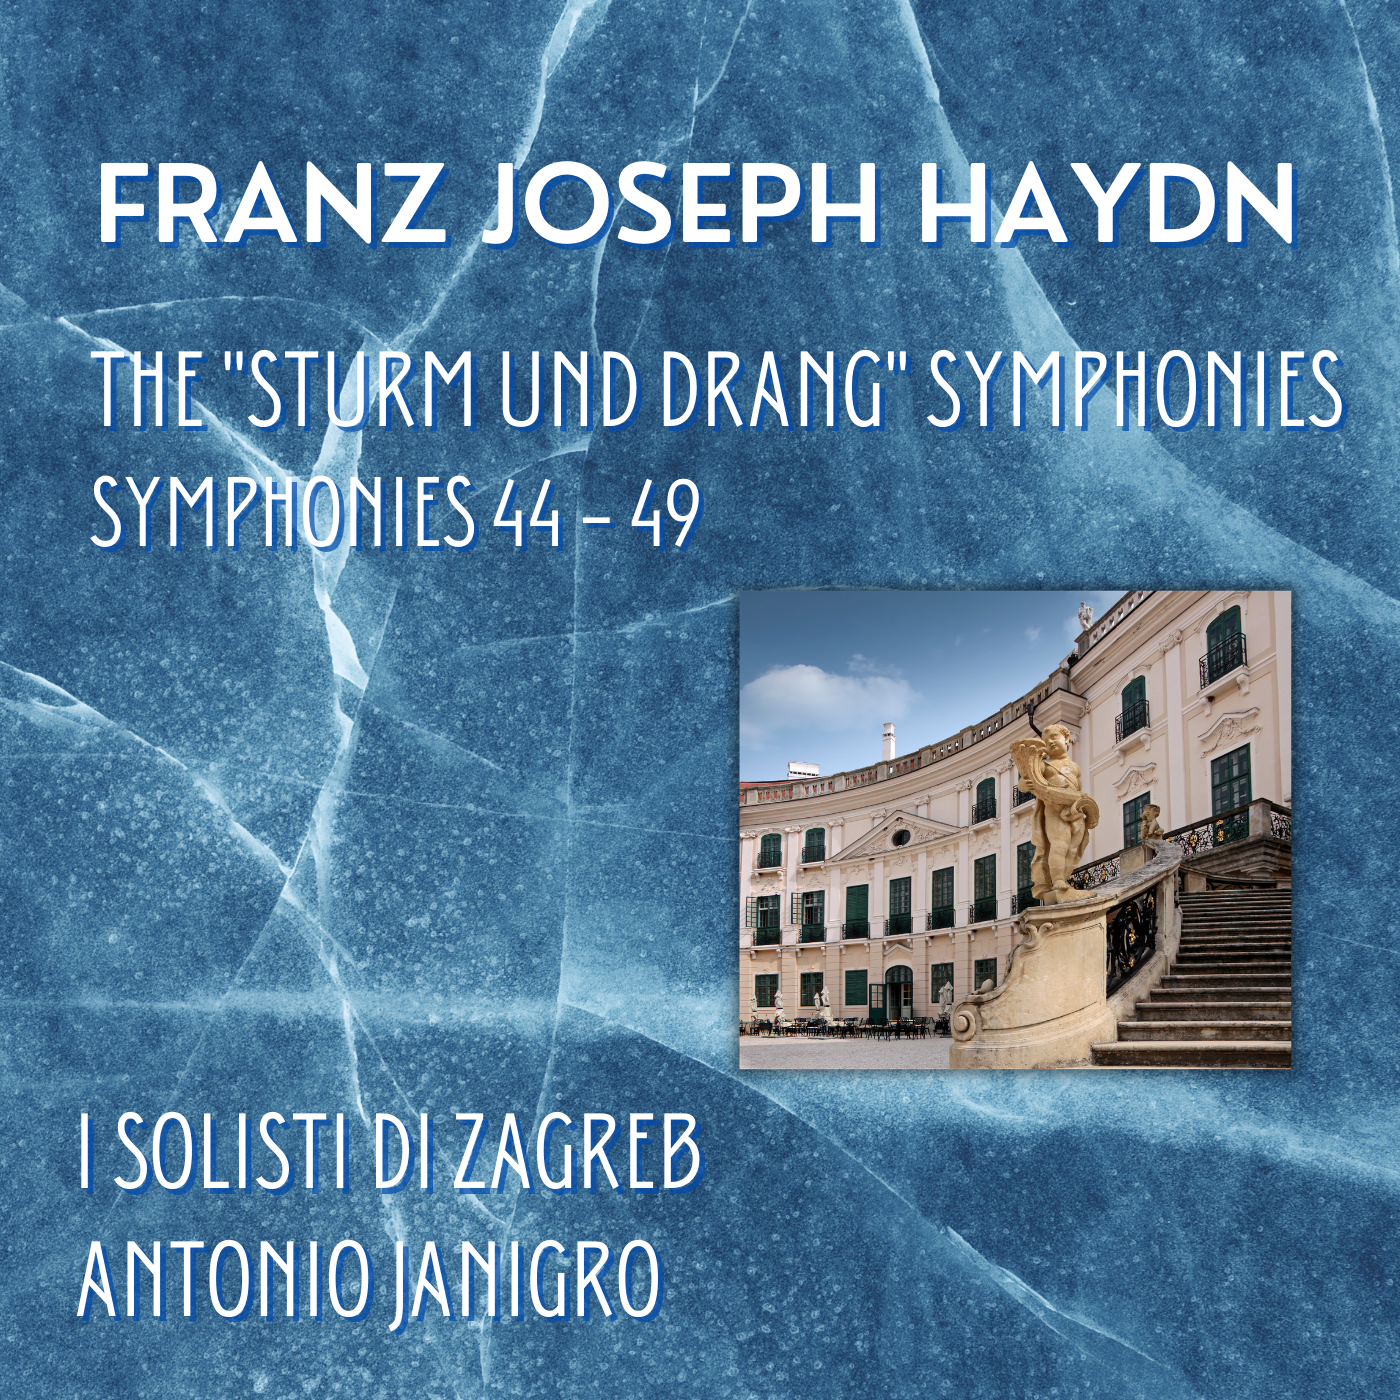 HAYDN: Symphonies 44-49 (Sturm und Drang Symphonies) - I Solisti di Zagreb, Antonio Janigro (2 HOUR DIGITAL DOWNLOAD)